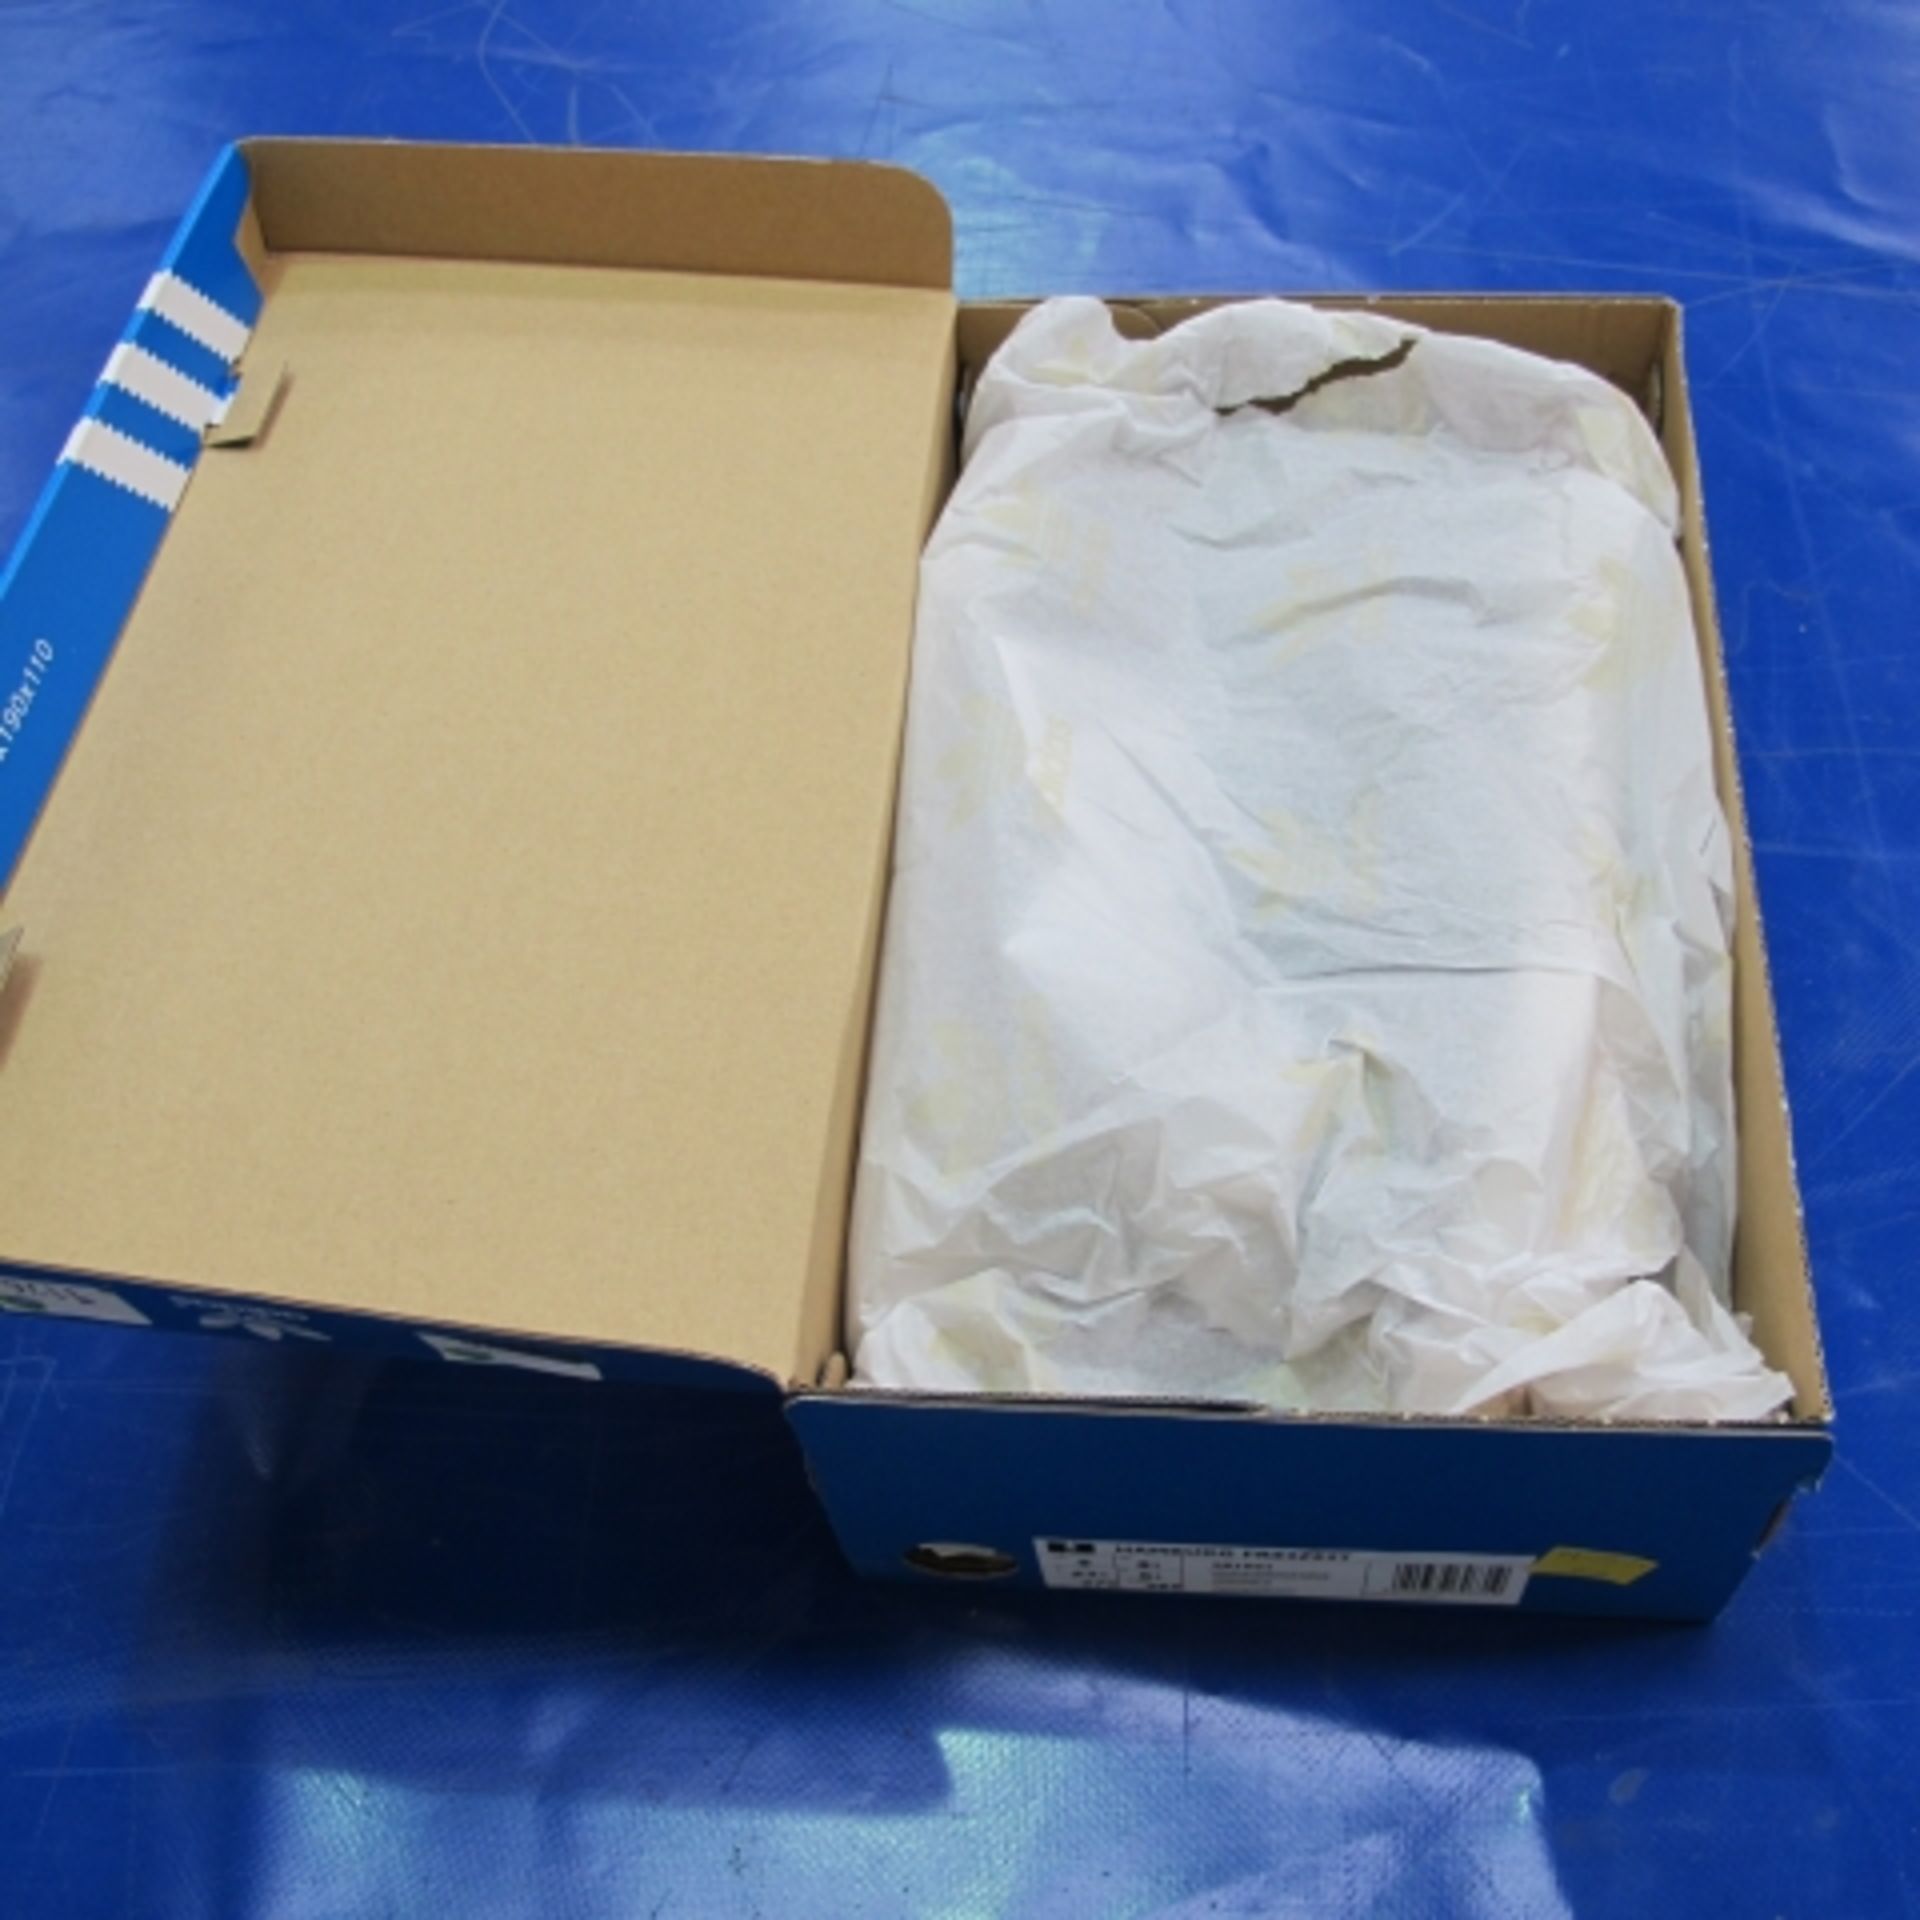 A pair of Adidas boxed shoes (new), UK size 8½ Hamburg Freizeit Shoes (RRP £79) (est £20-£40) - Image 5 of 7